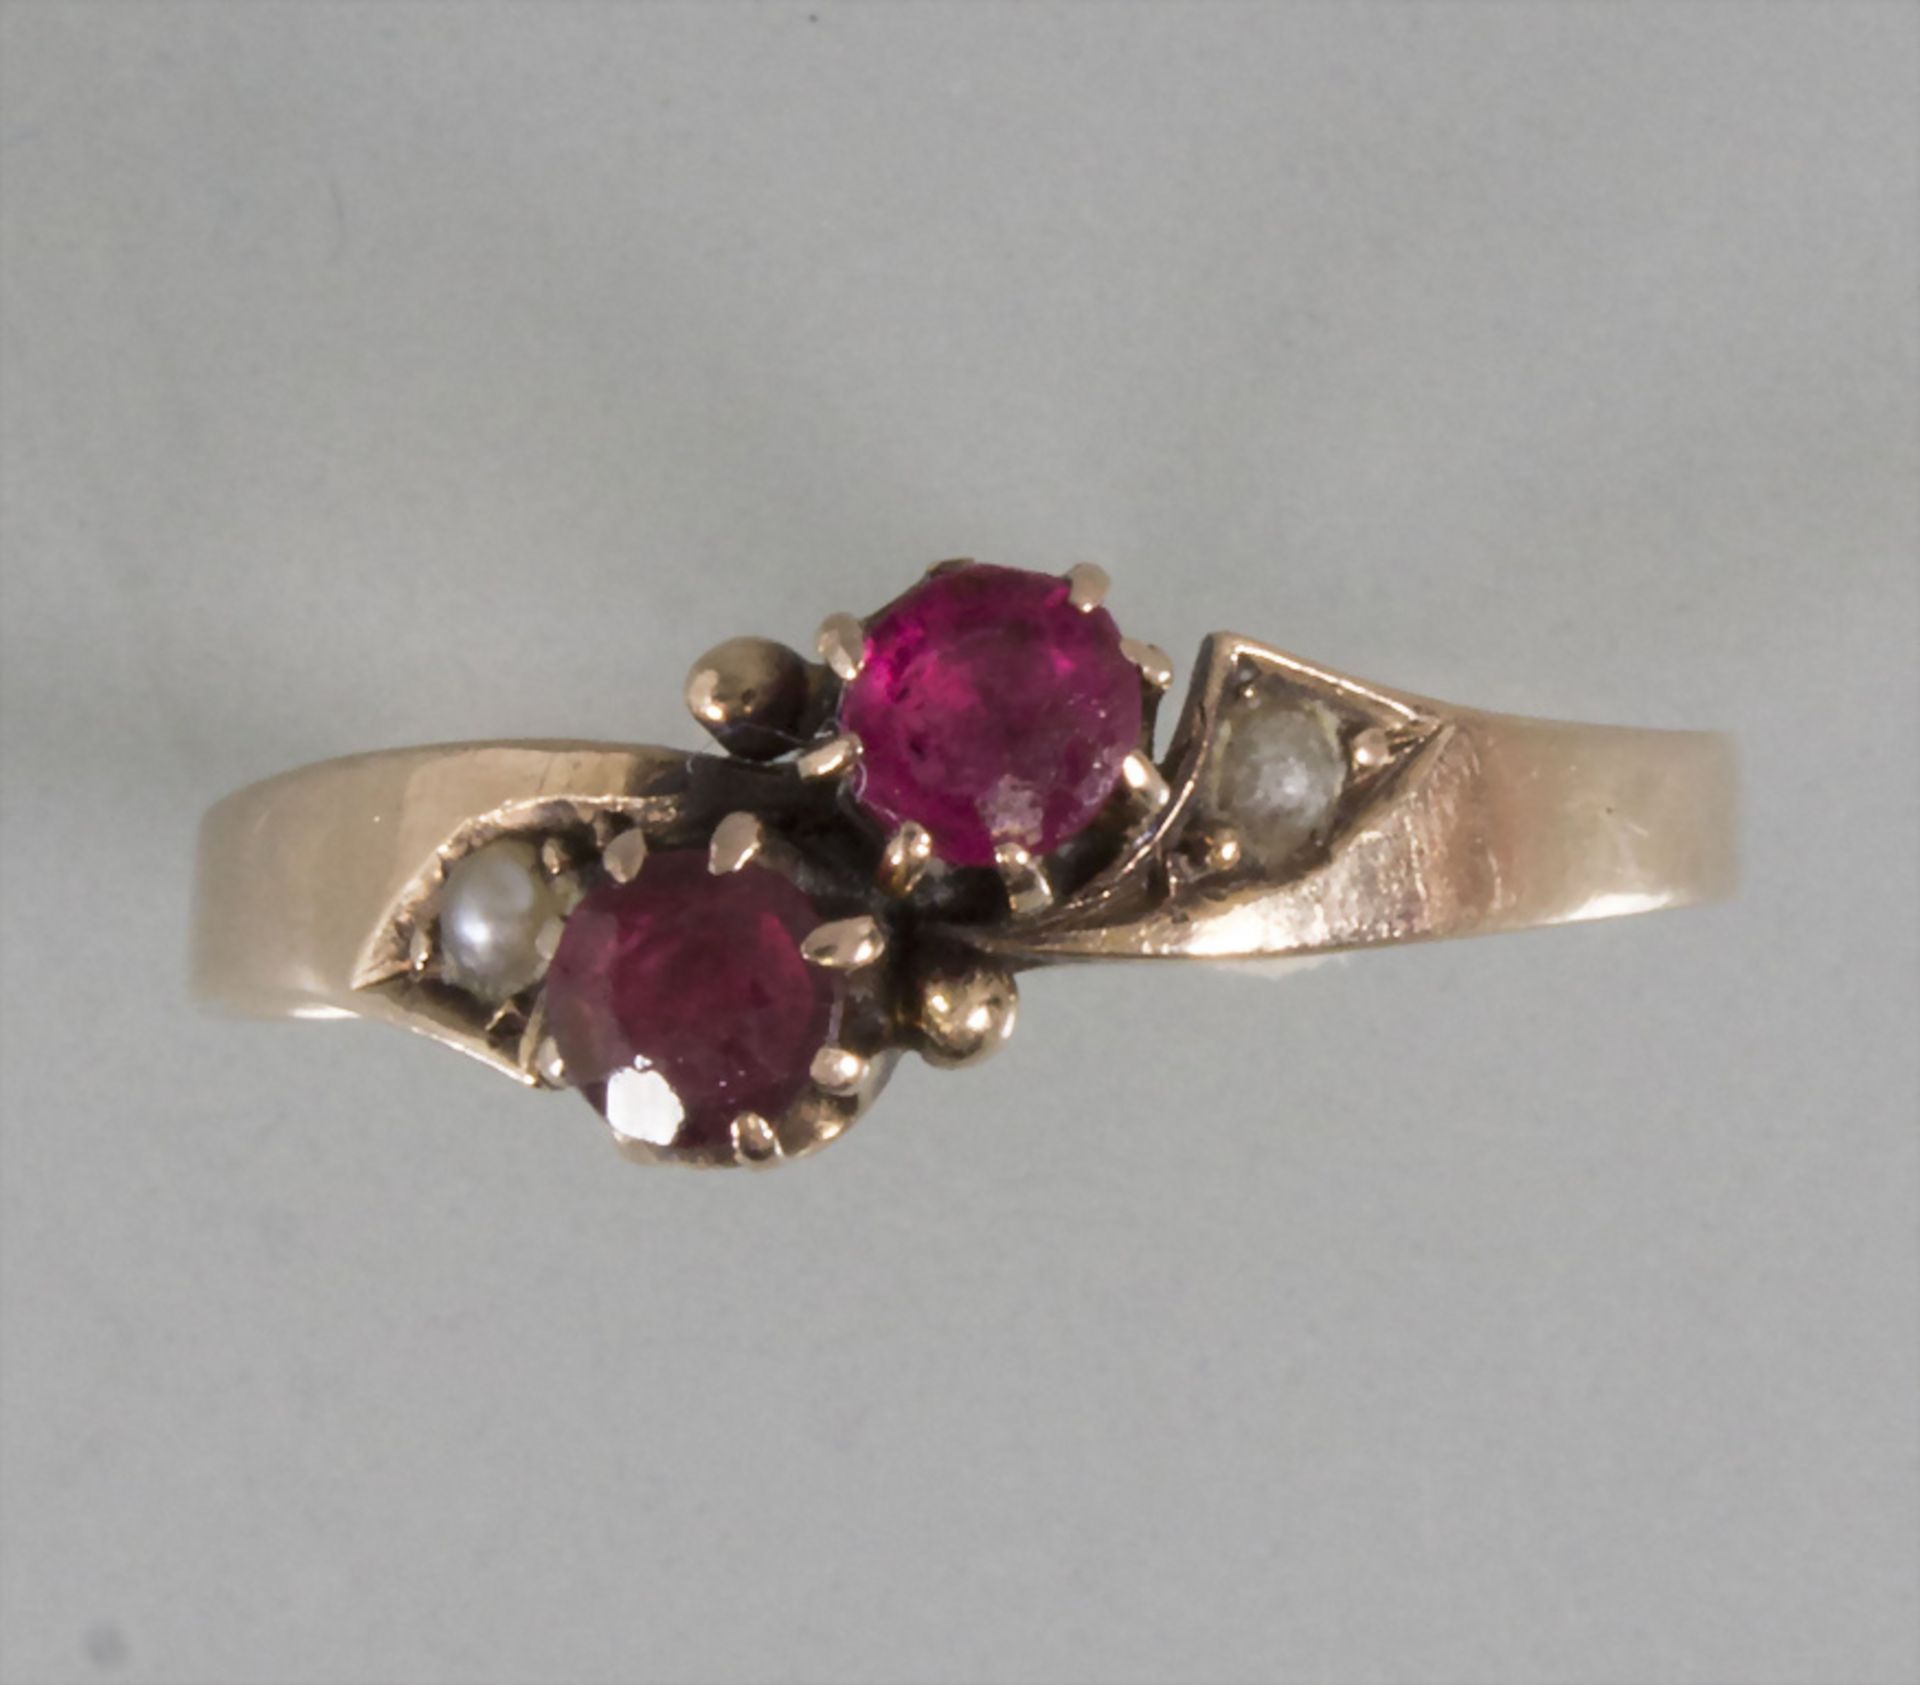 Damenring mit Rubinen / A 14k ladies gold ring with rubys